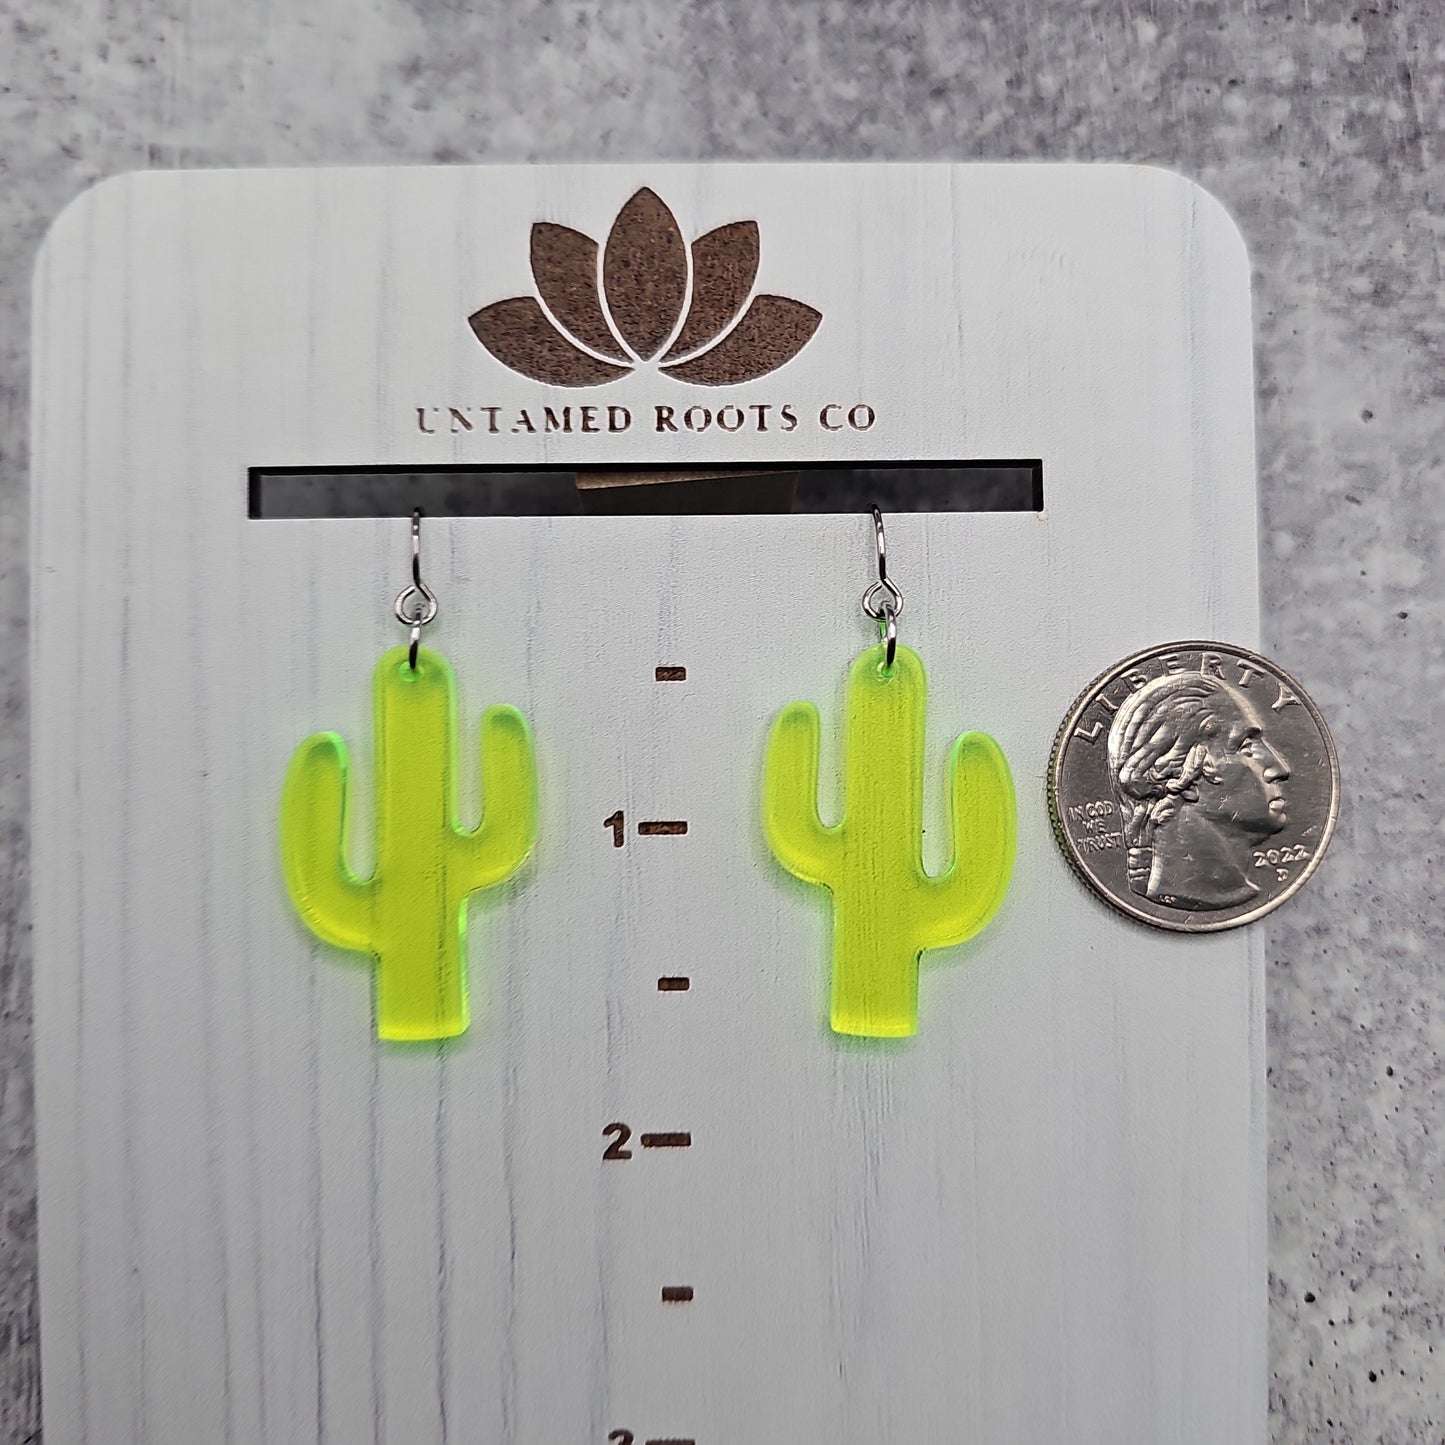 Fluorescent Green Cactus Earrings